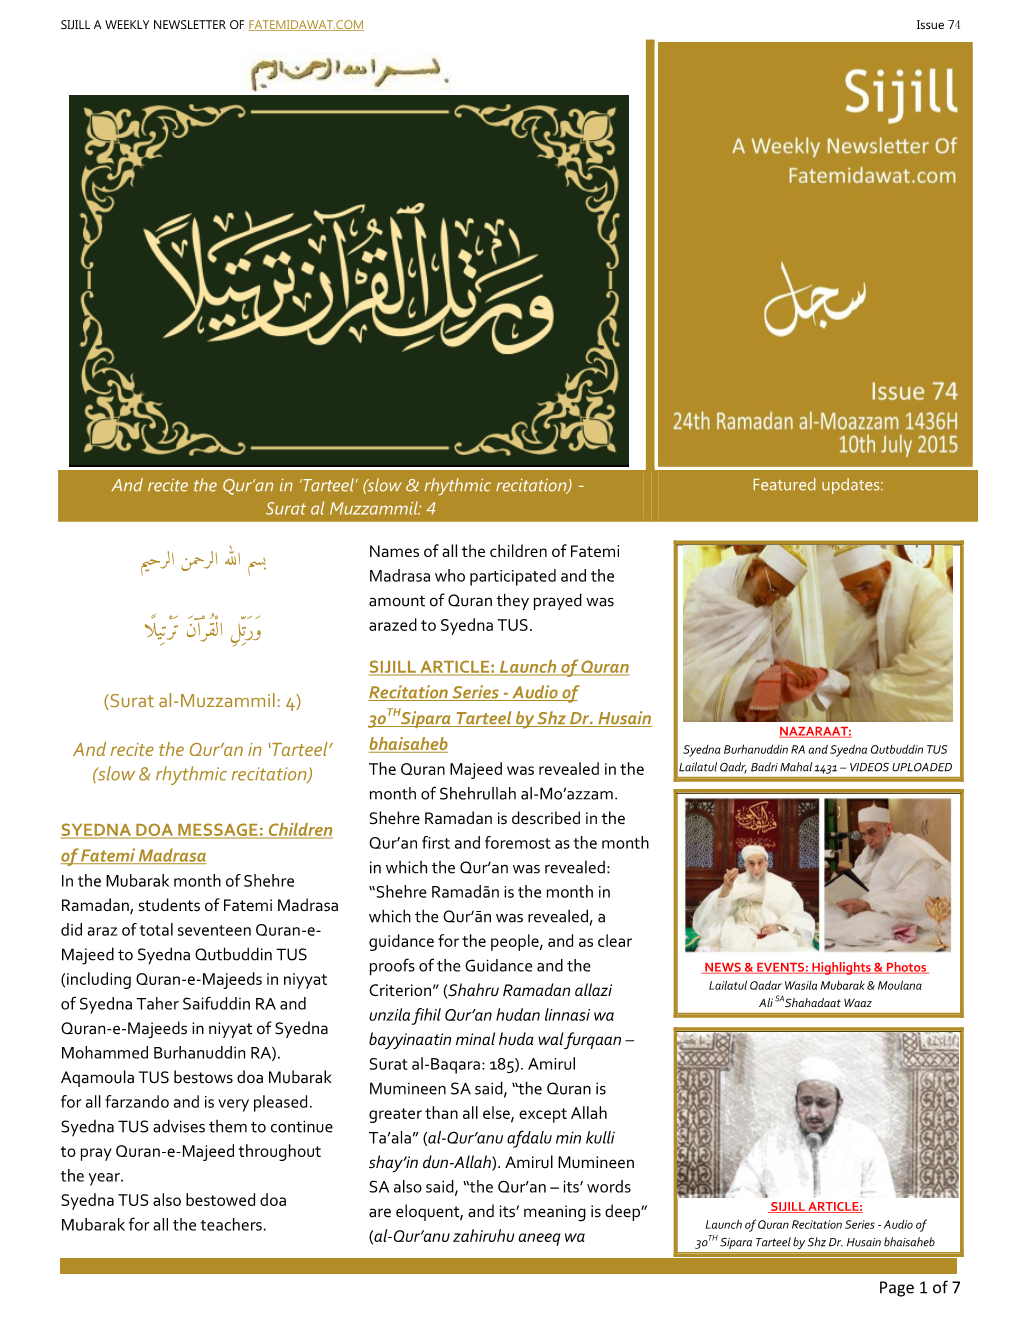 Surat Al-Muzzammil: 4) Recitation Series - Audio of 30Thsipara Tarteel by Shz Dr